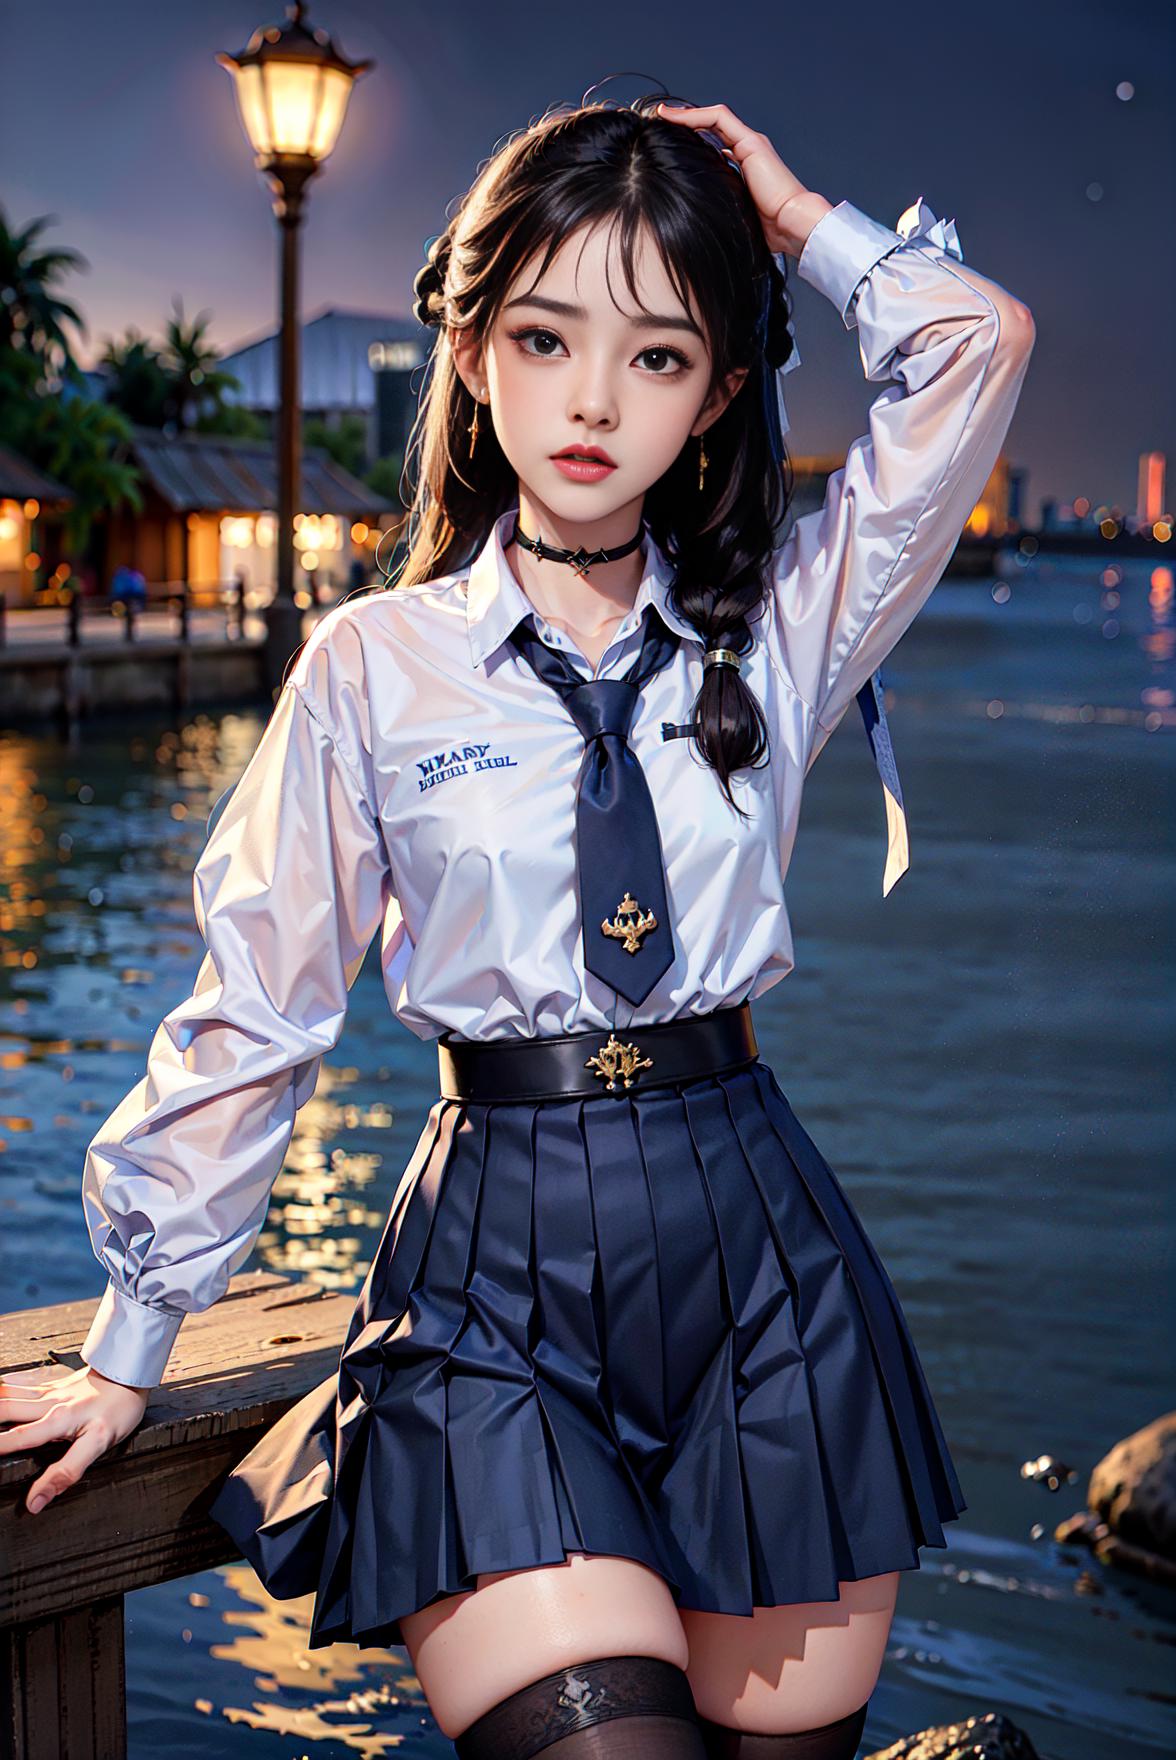 Thai High school uniform image by SalmonRK